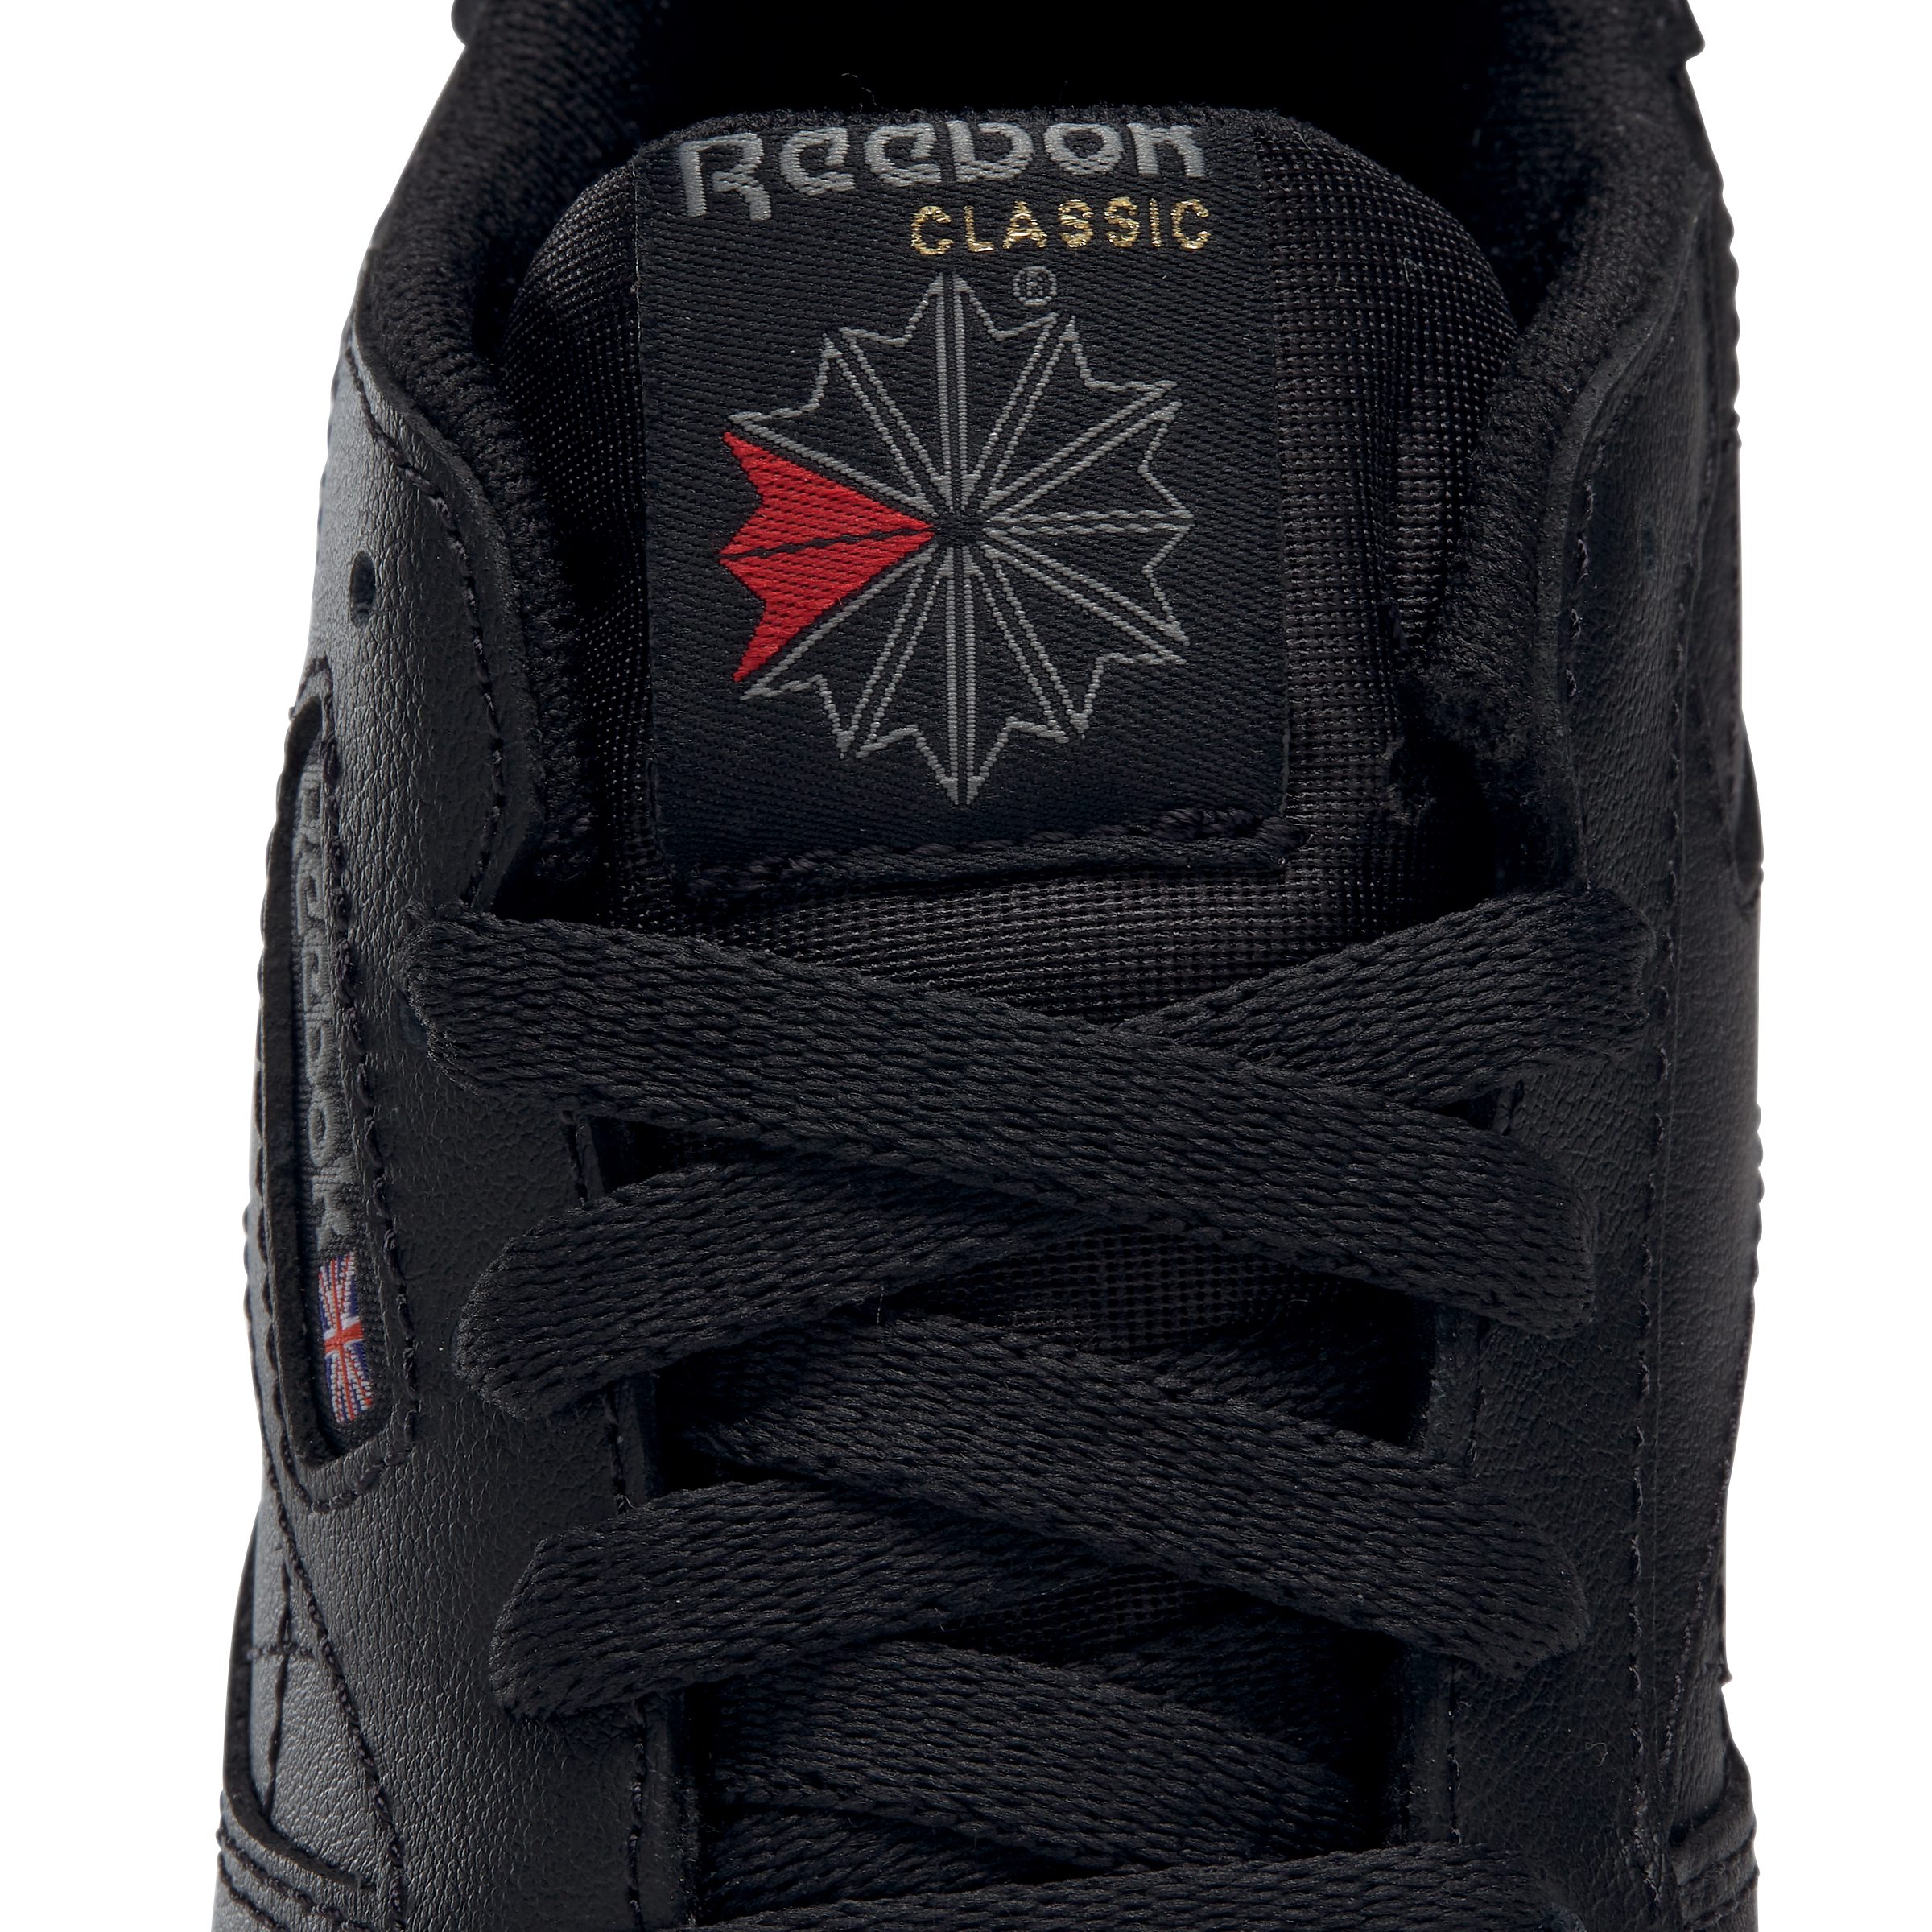 Reebok Classic CLASSIC Sneaker LEATHER schwarz